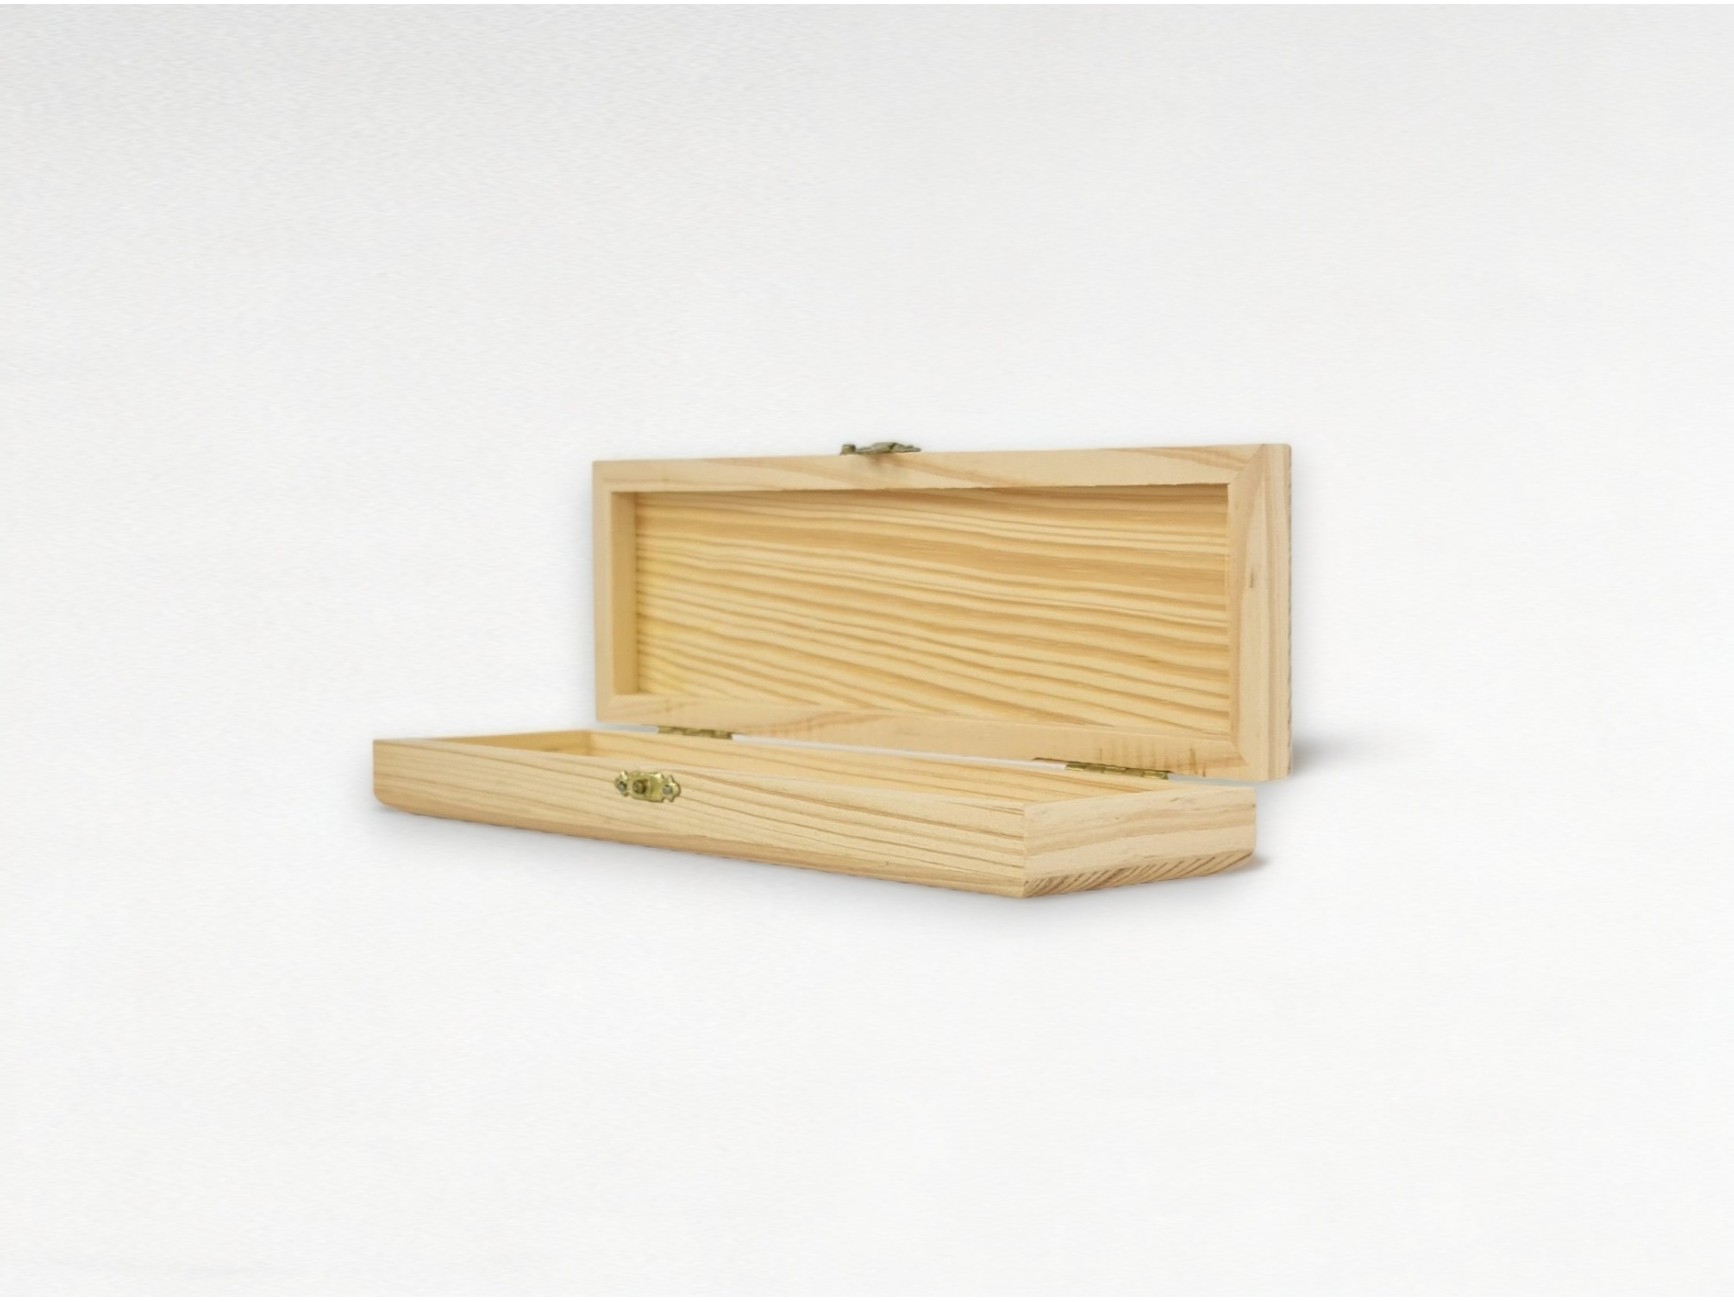 Caja madera de pino macizo con vidrio y separadores Manualidades 7626